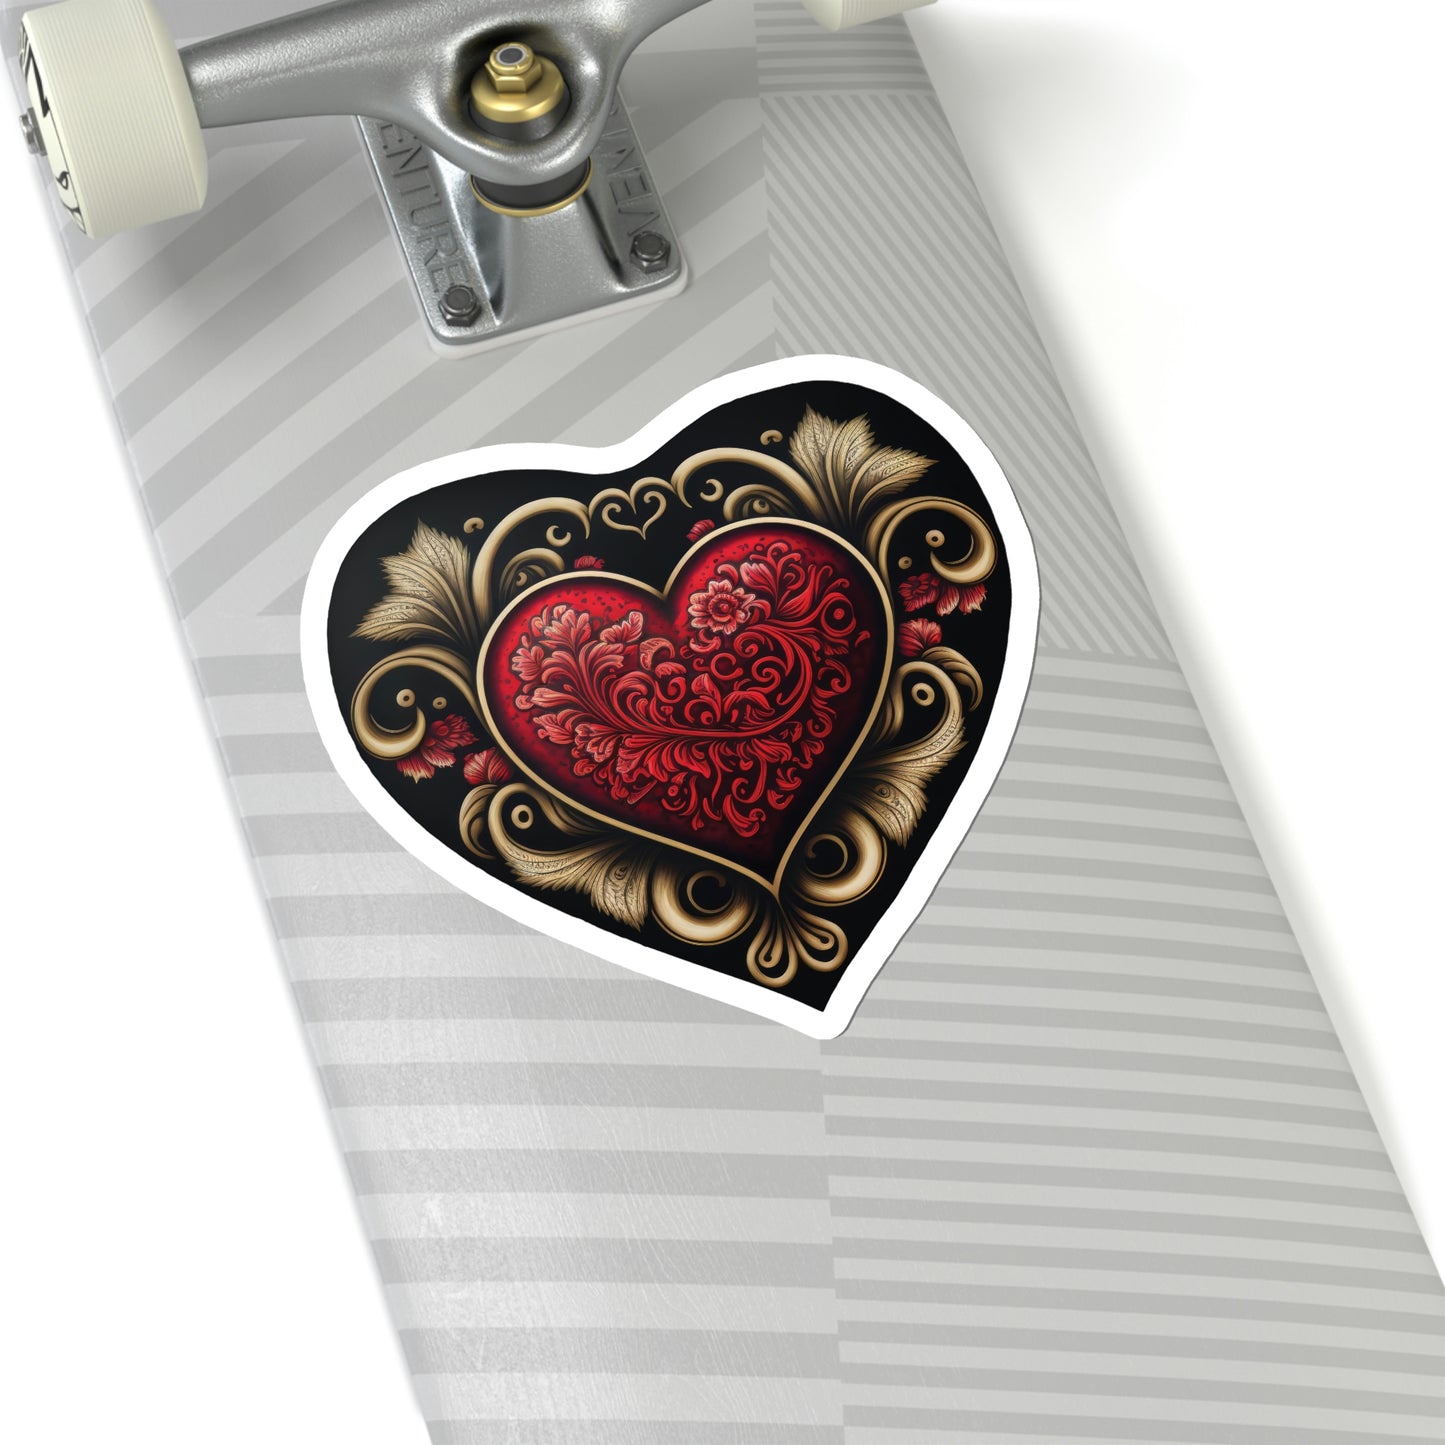 Gothic Love: Red Heart on Black Sticker